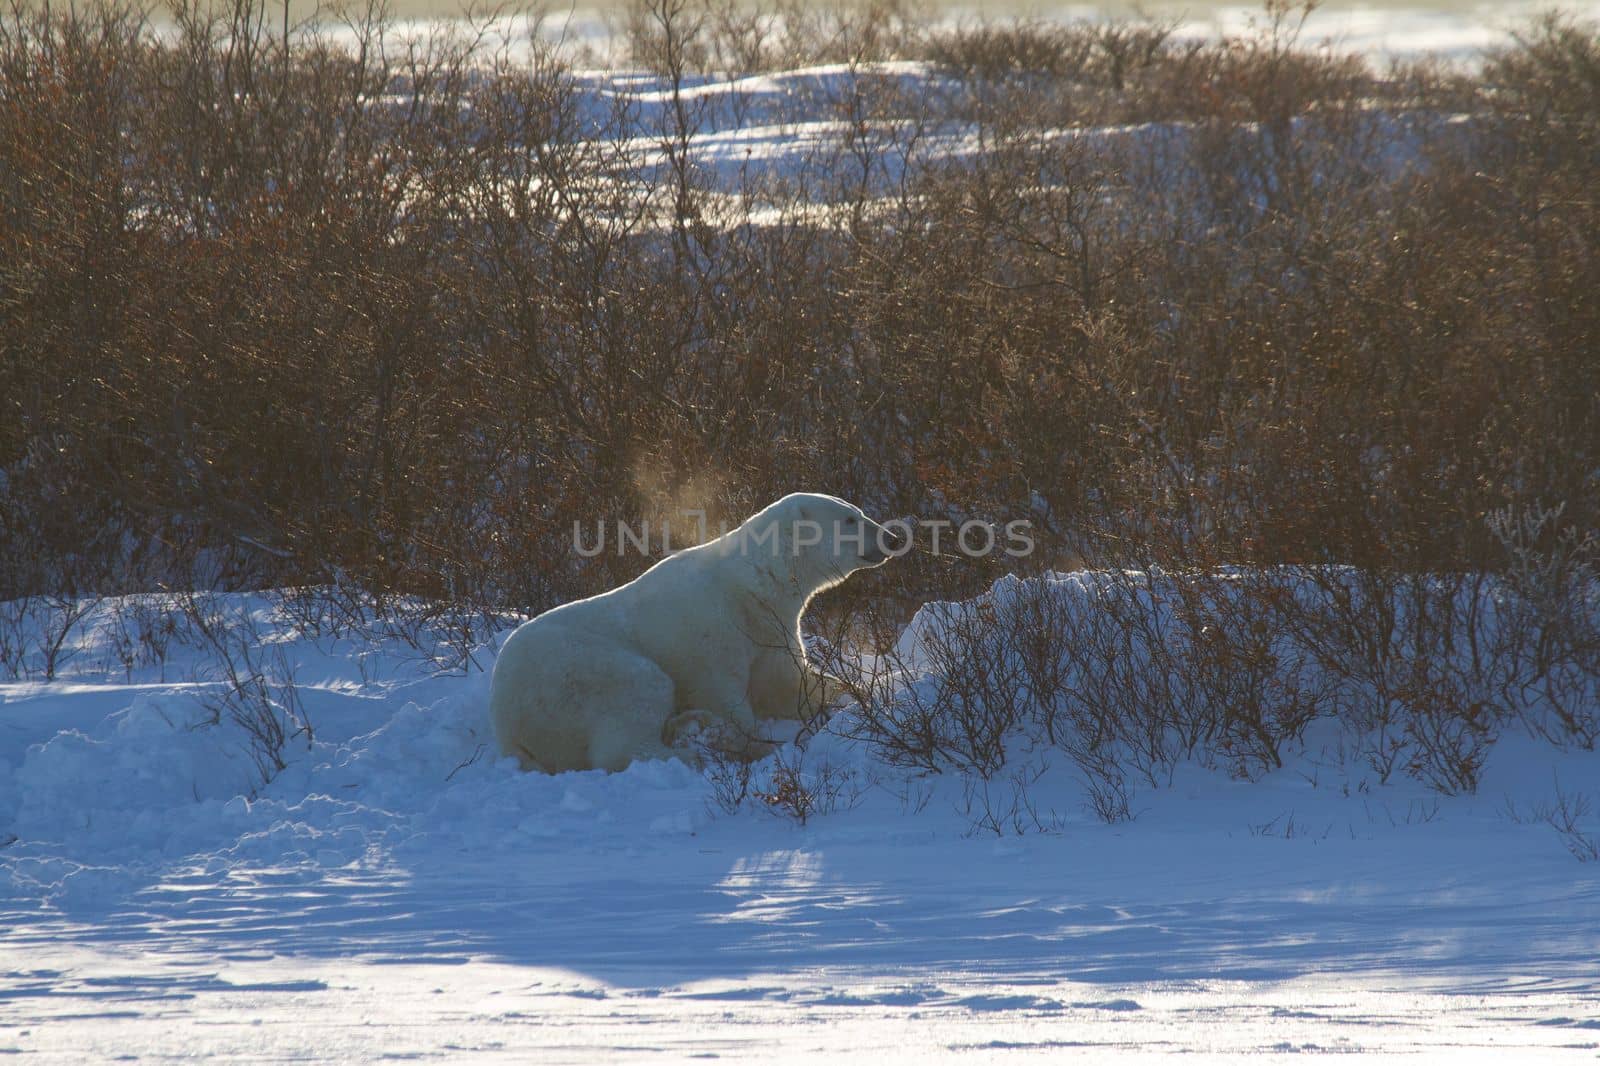 A polar bear shaking snow off with a second polar bear hiding behind willows by Granchinho